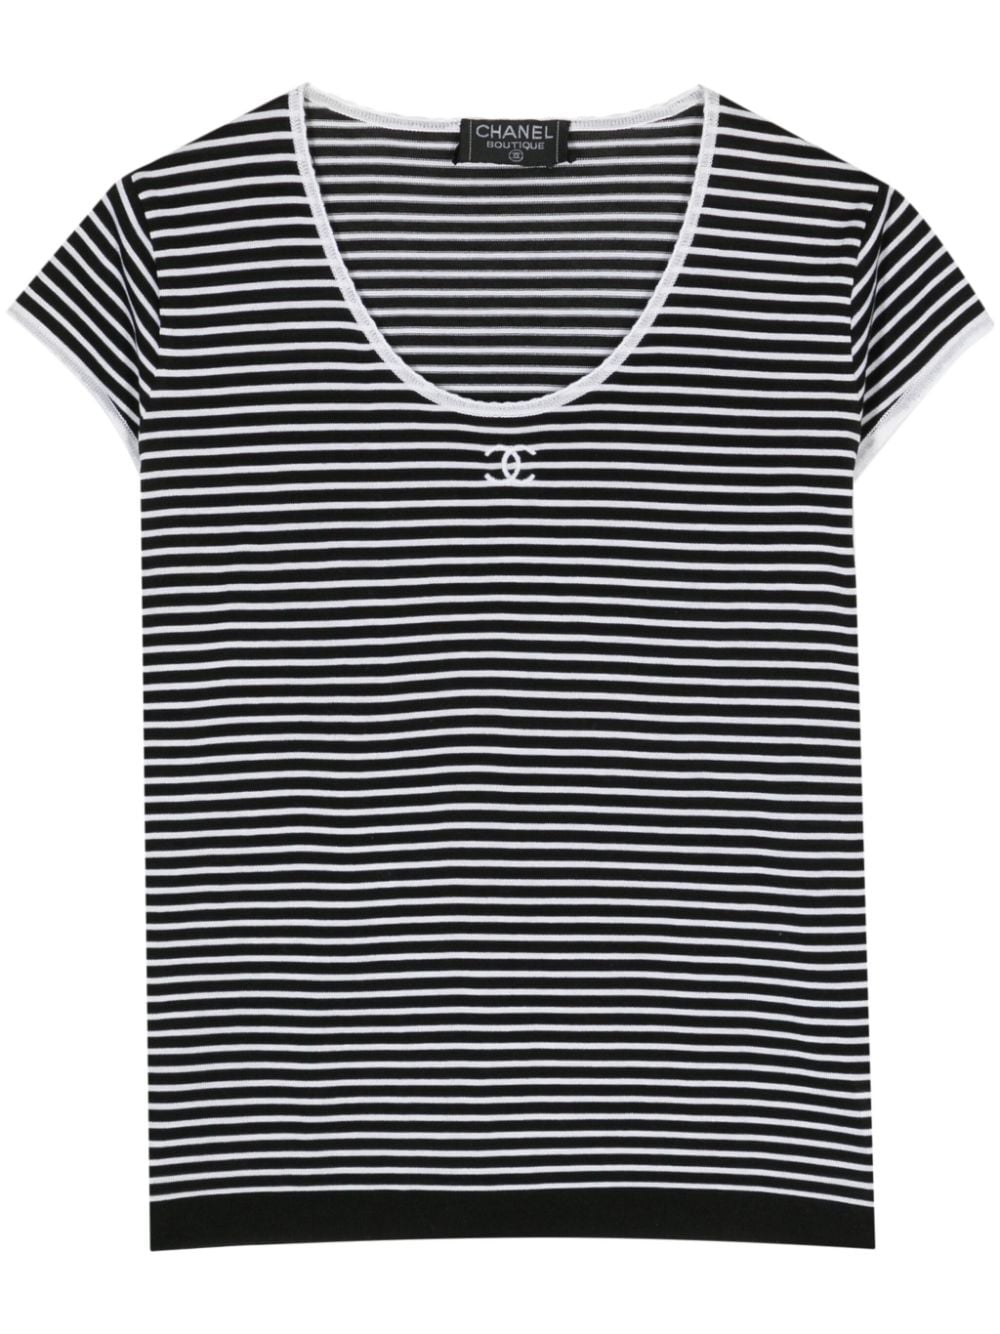 2000s CC striped T-shirt